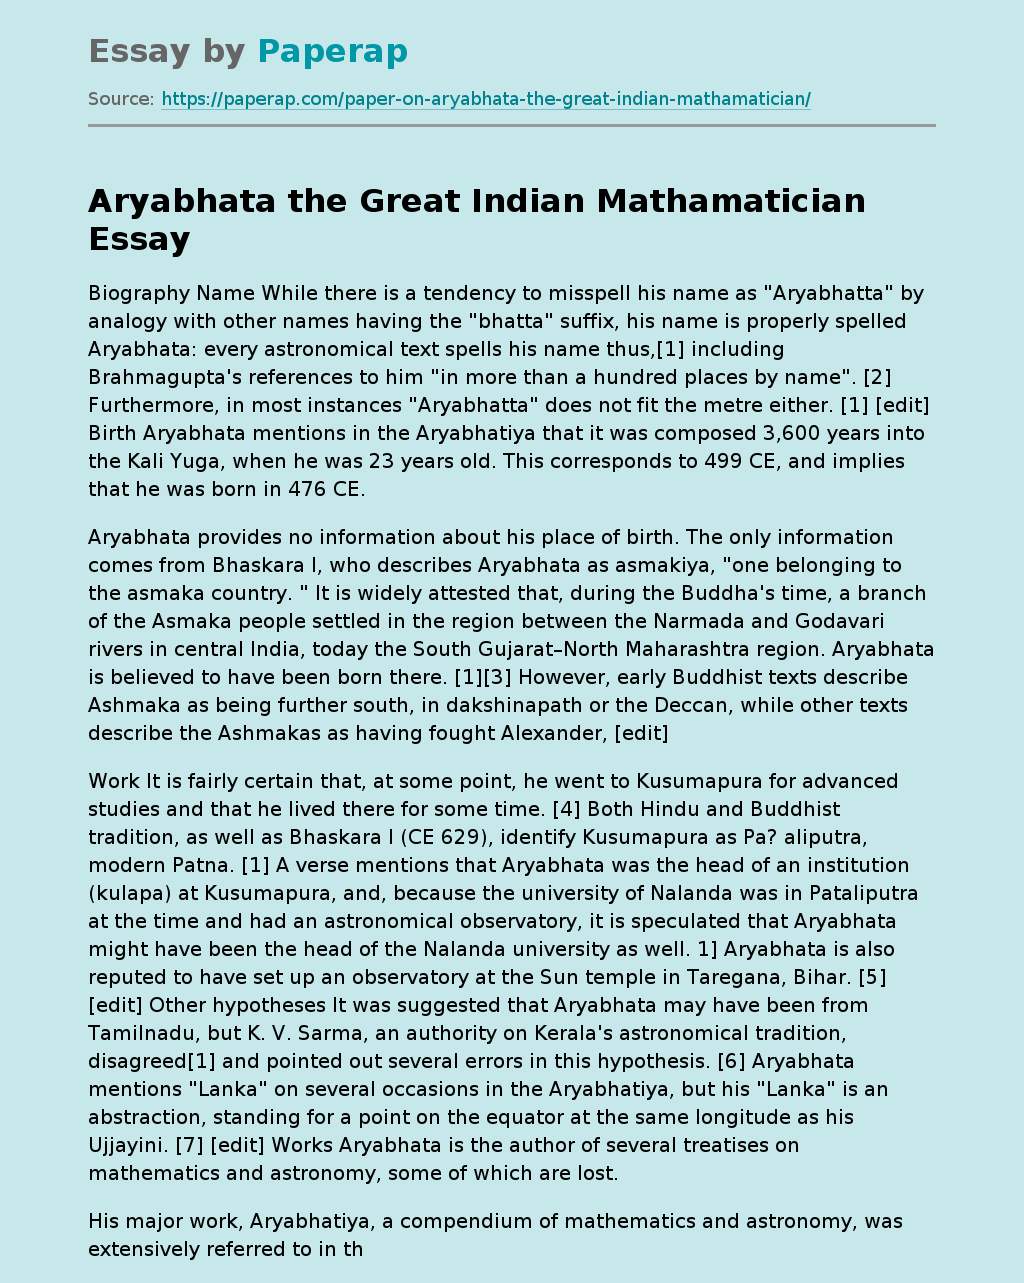 Aryabhata the Great Indian Mathamatician